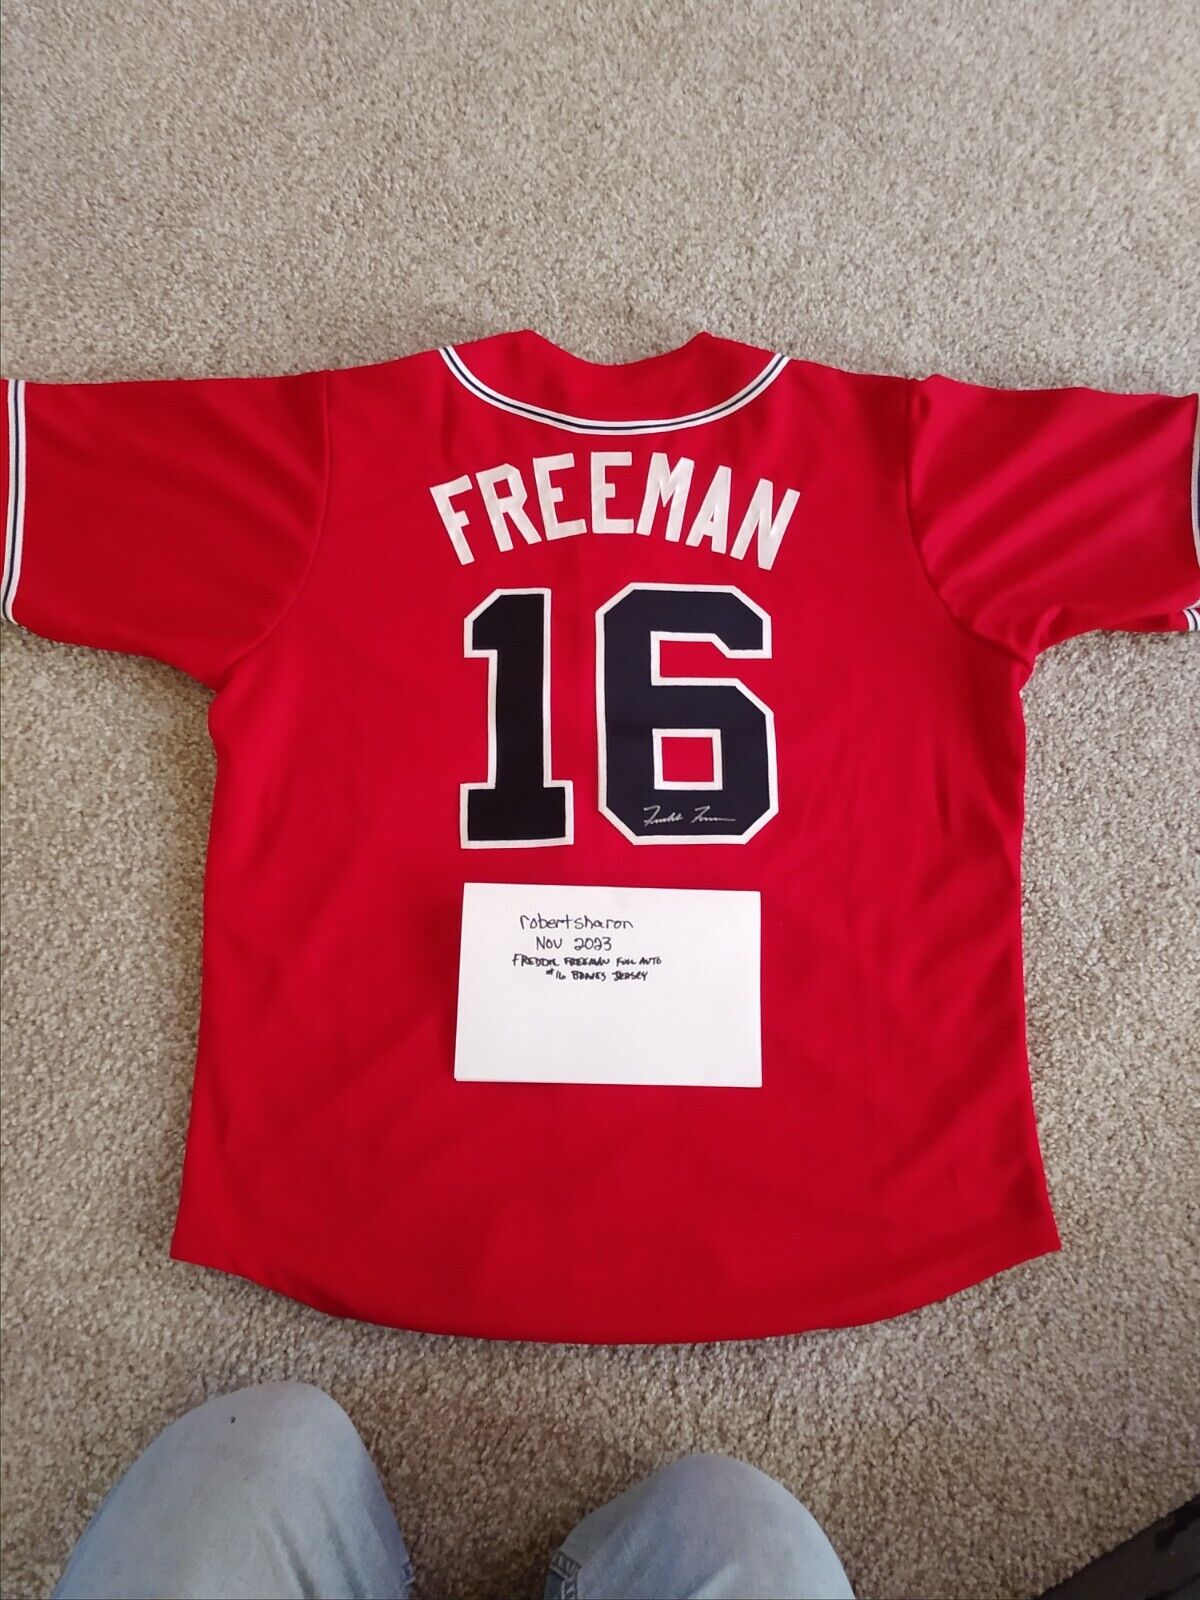 Freddie Freeman Signed Auto Full Name Braves Jersey XL Milb #16 No COA Dodgers 